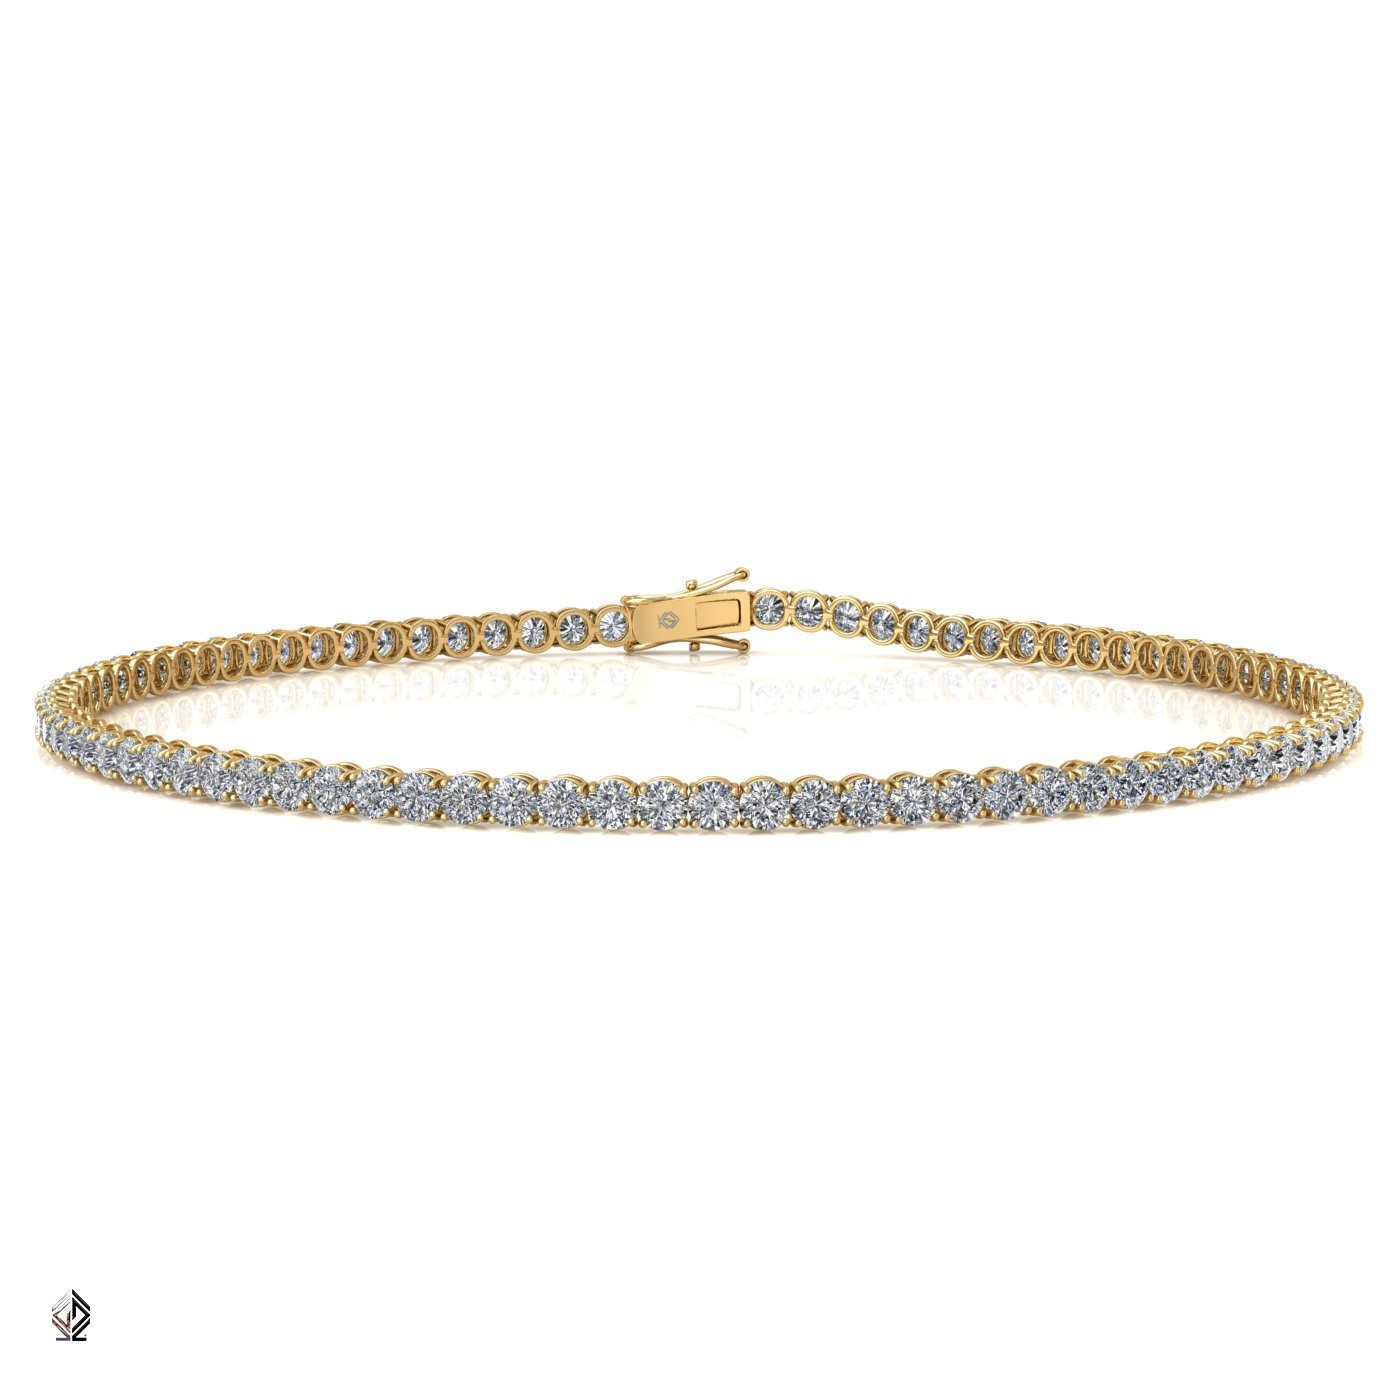 18k yellow gold  1.8mm 4 prong round shape diamond tennis bracelet in round setting